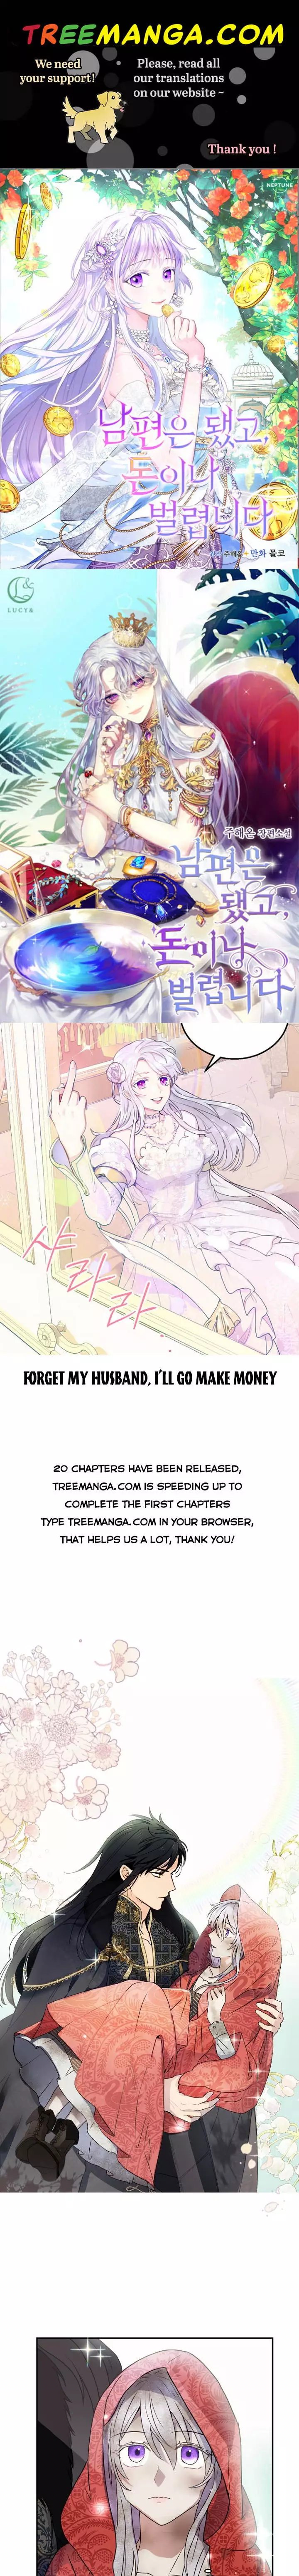 Forget My Husband, I’Ll Go Make Money - 4 page 1-cd800b98